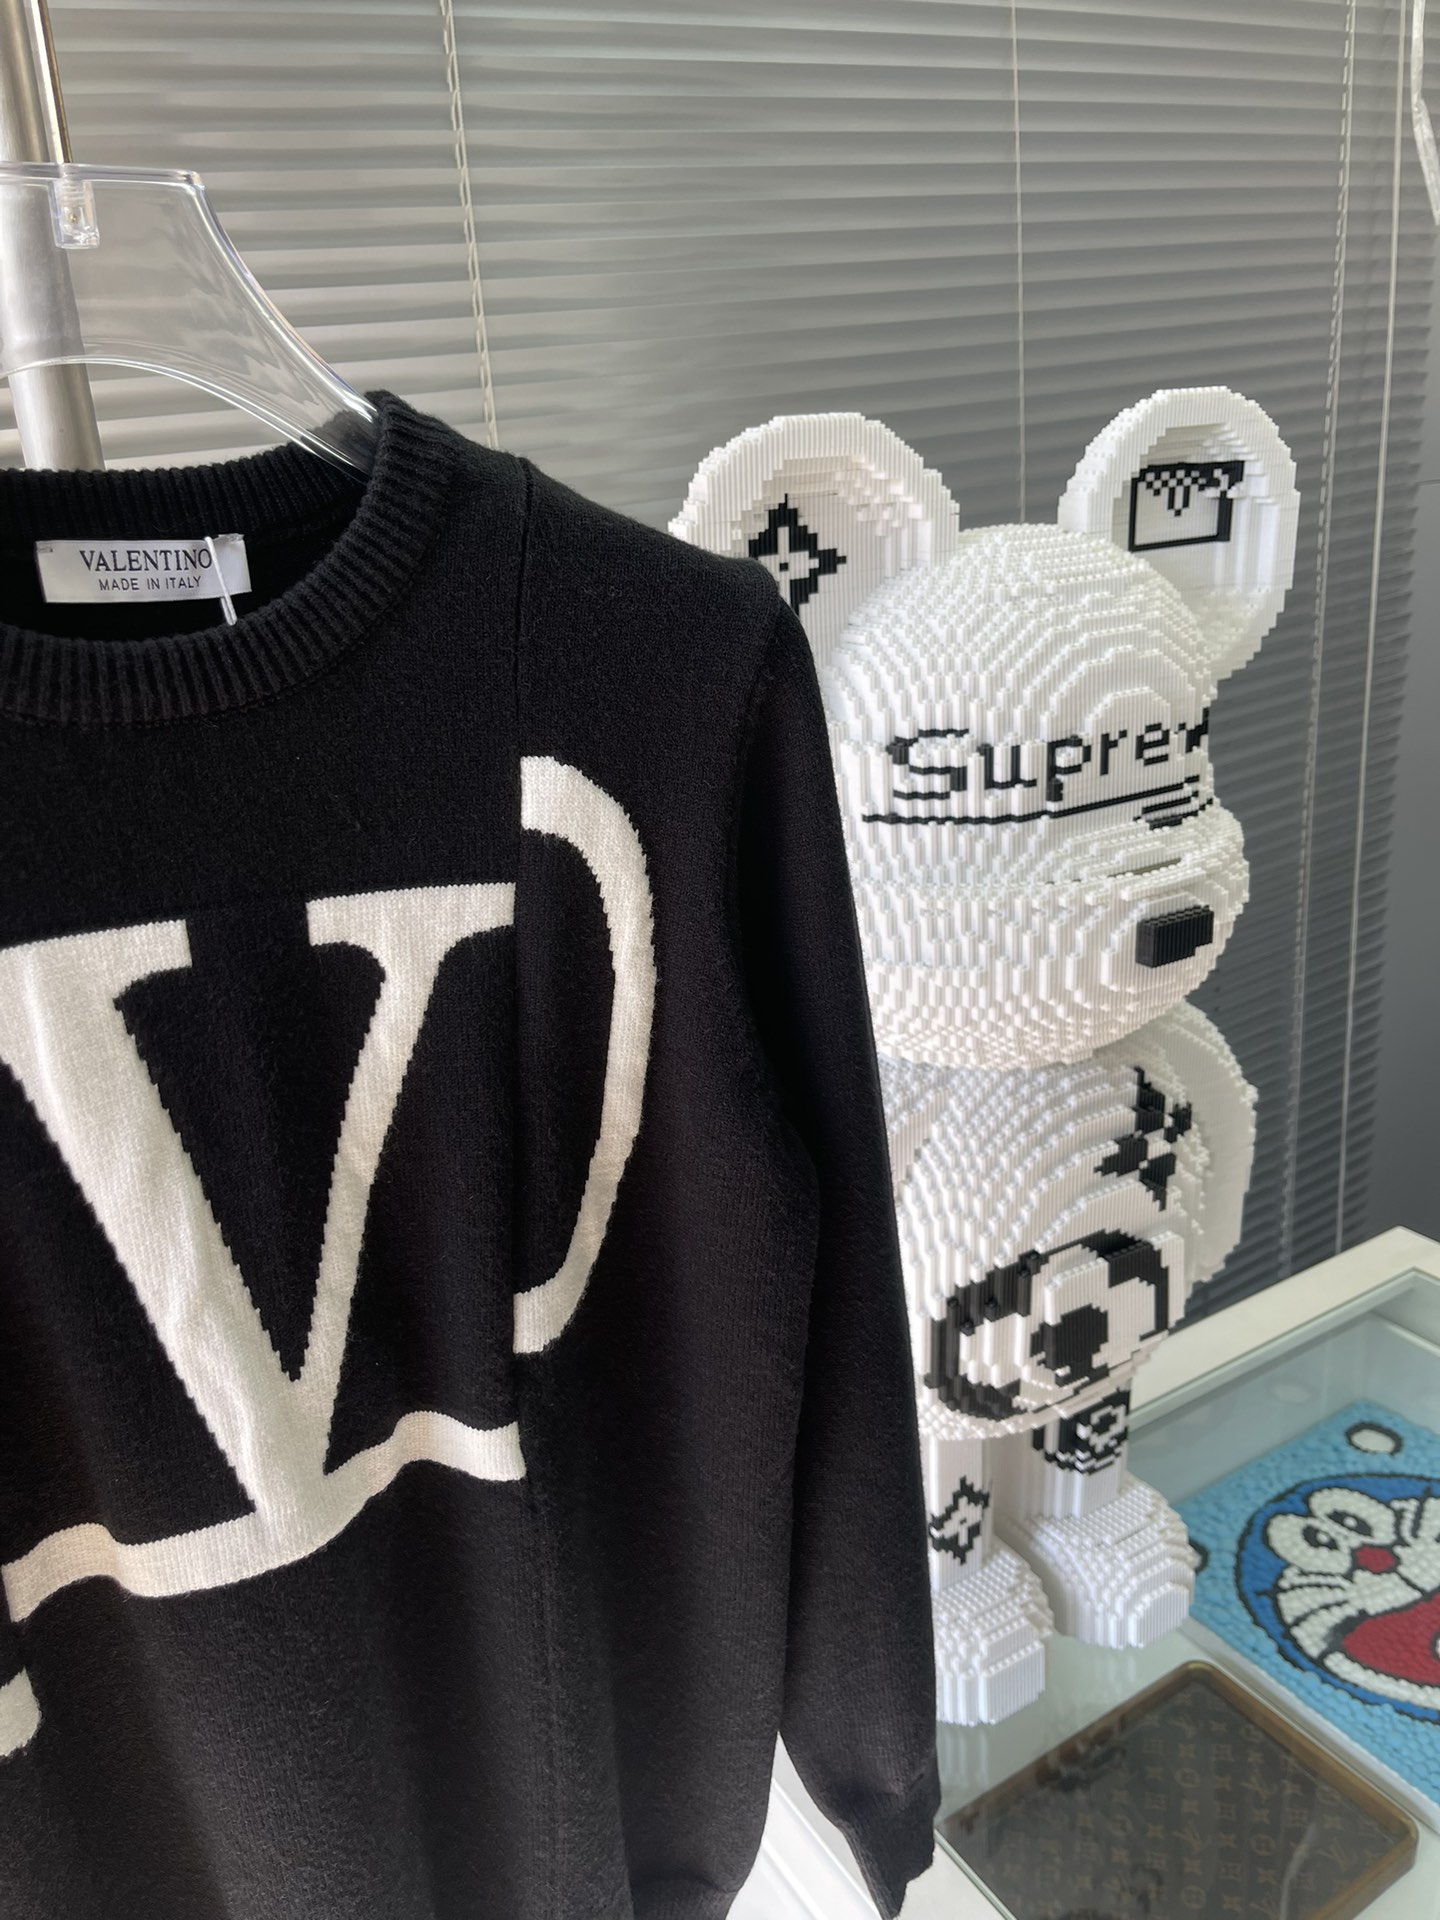 valentino メンズ ヴァレンティノ セーター偽物 HOT品質保証 トップス セーター 柔らかい 保温 暖かい ブラック_5